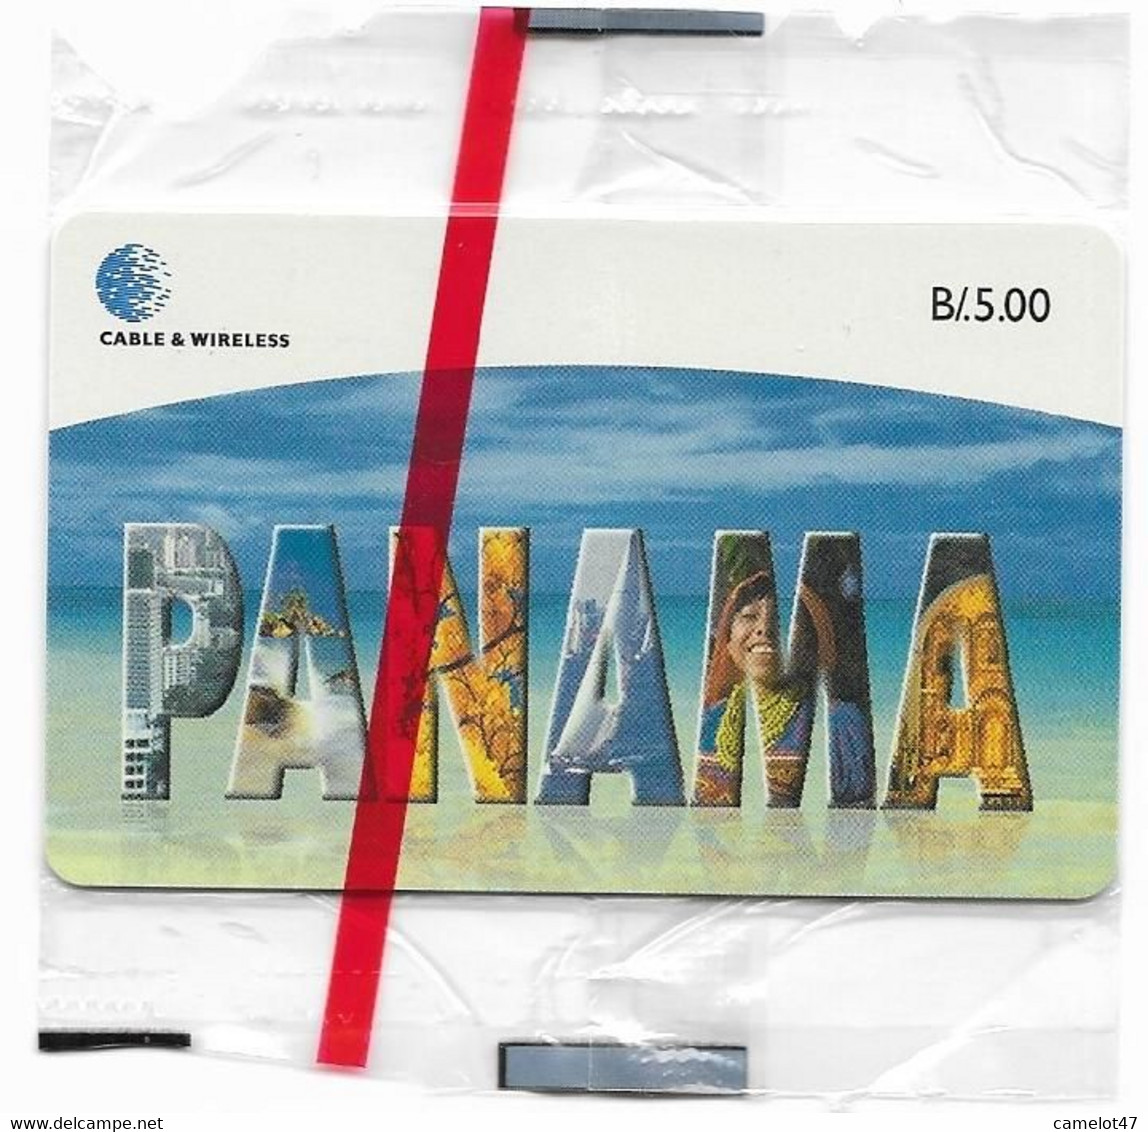 Panamá, Cable & Wireless Chip Phonecard, No Value, Mint Condition, # Panaman-1 - Panama